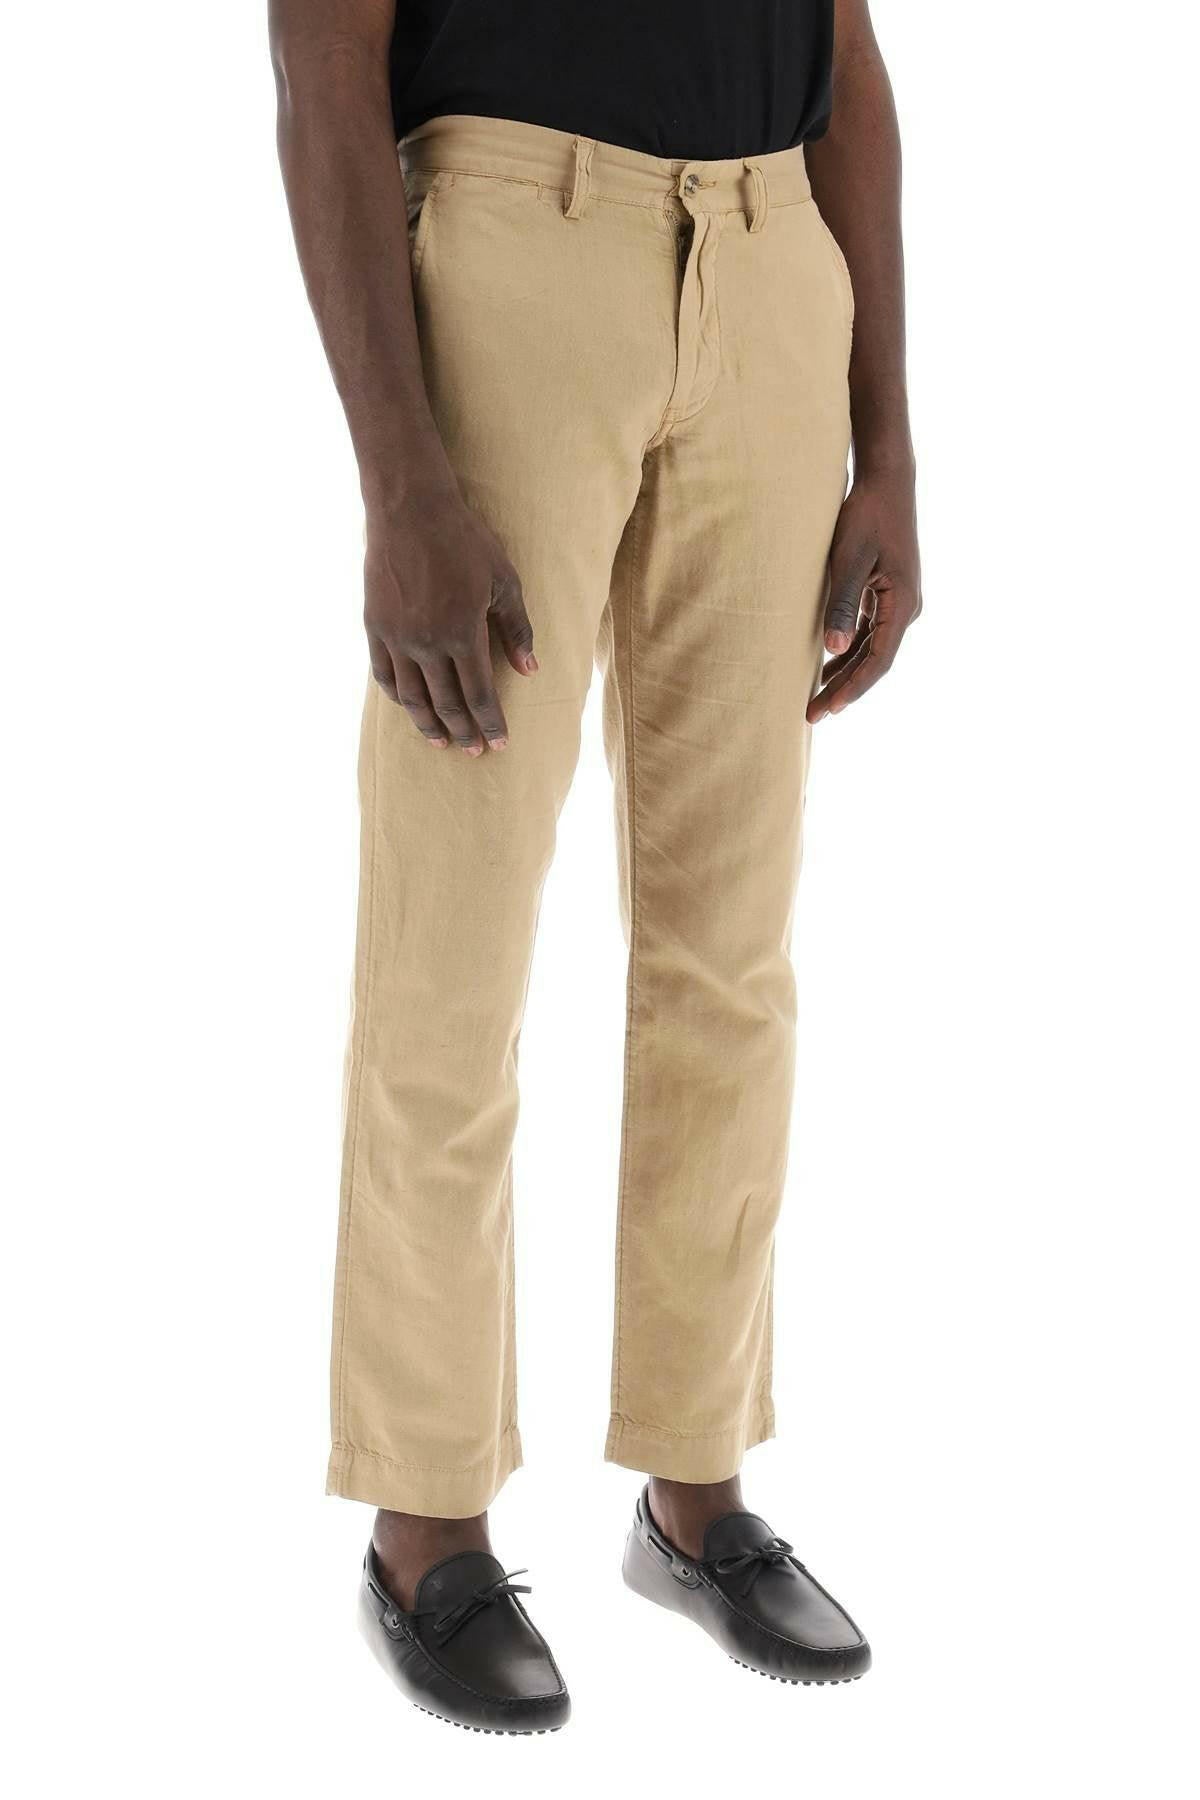 Polo Ralph Lauren Linen and Cotton Trousers - JOHN JULIA